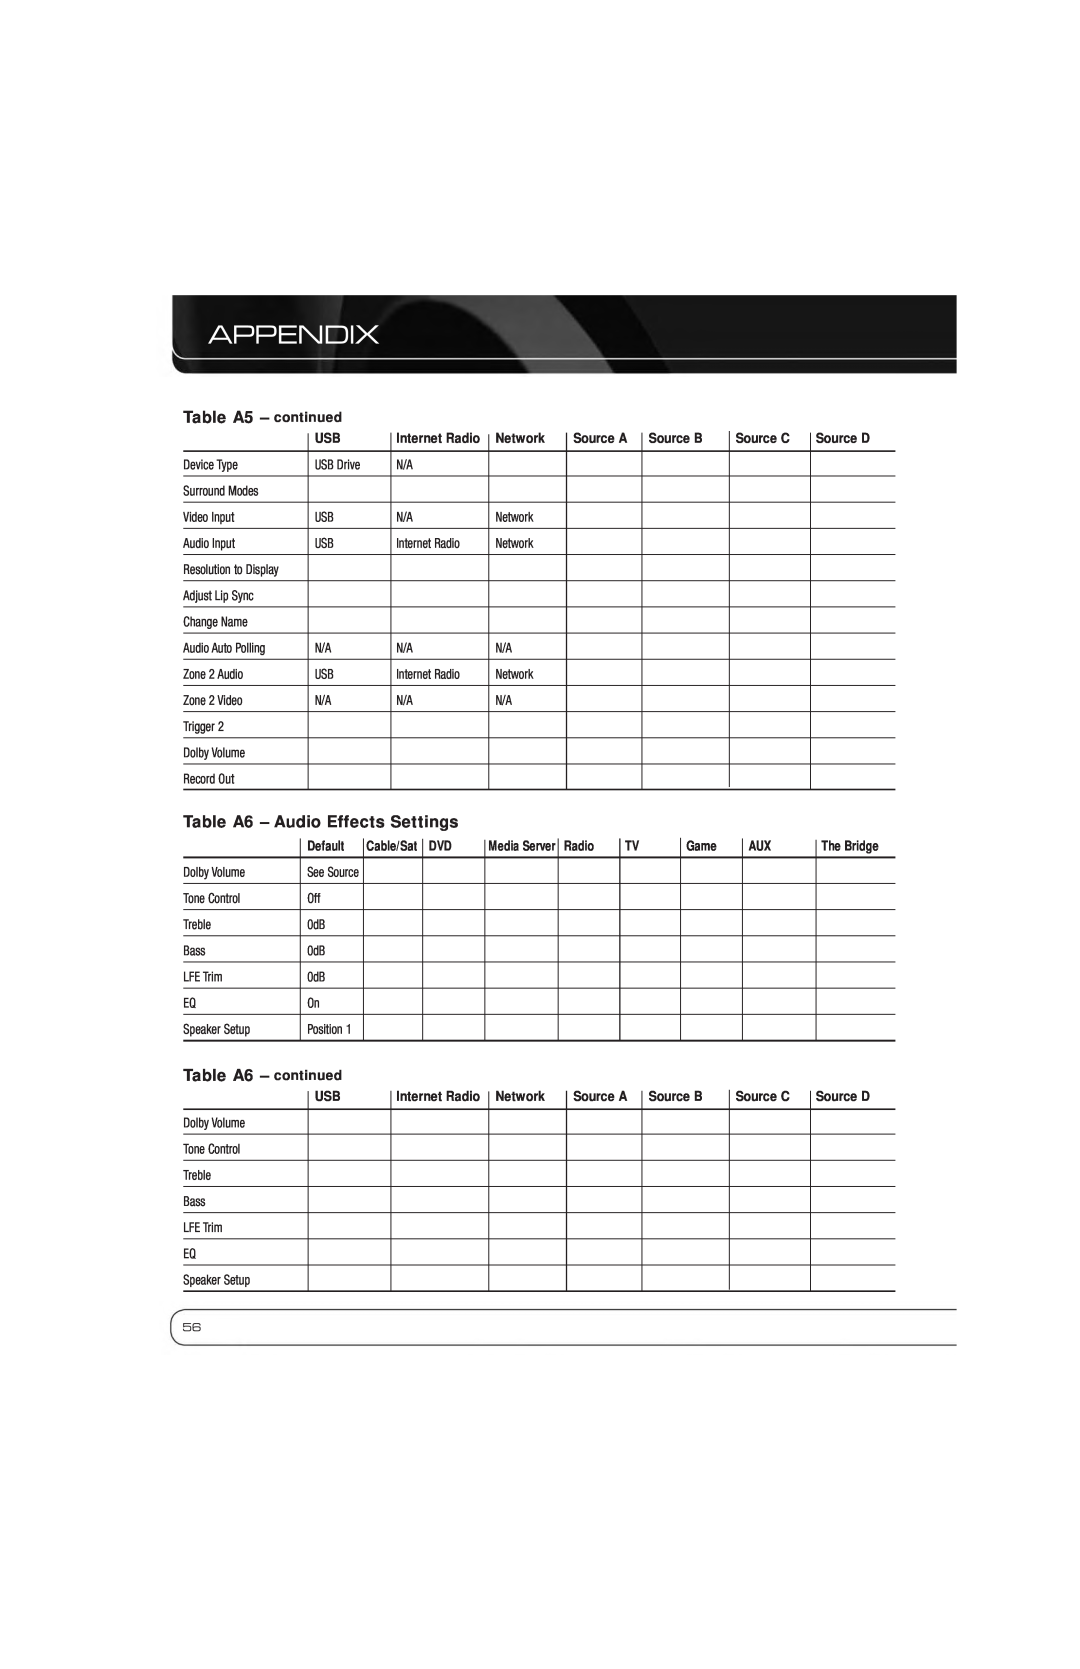 Harman-Kardon AVR 7550HD Table A5 - continued, Table A6 - Audio Effects Settings, Table A6 - continued, Appendix 